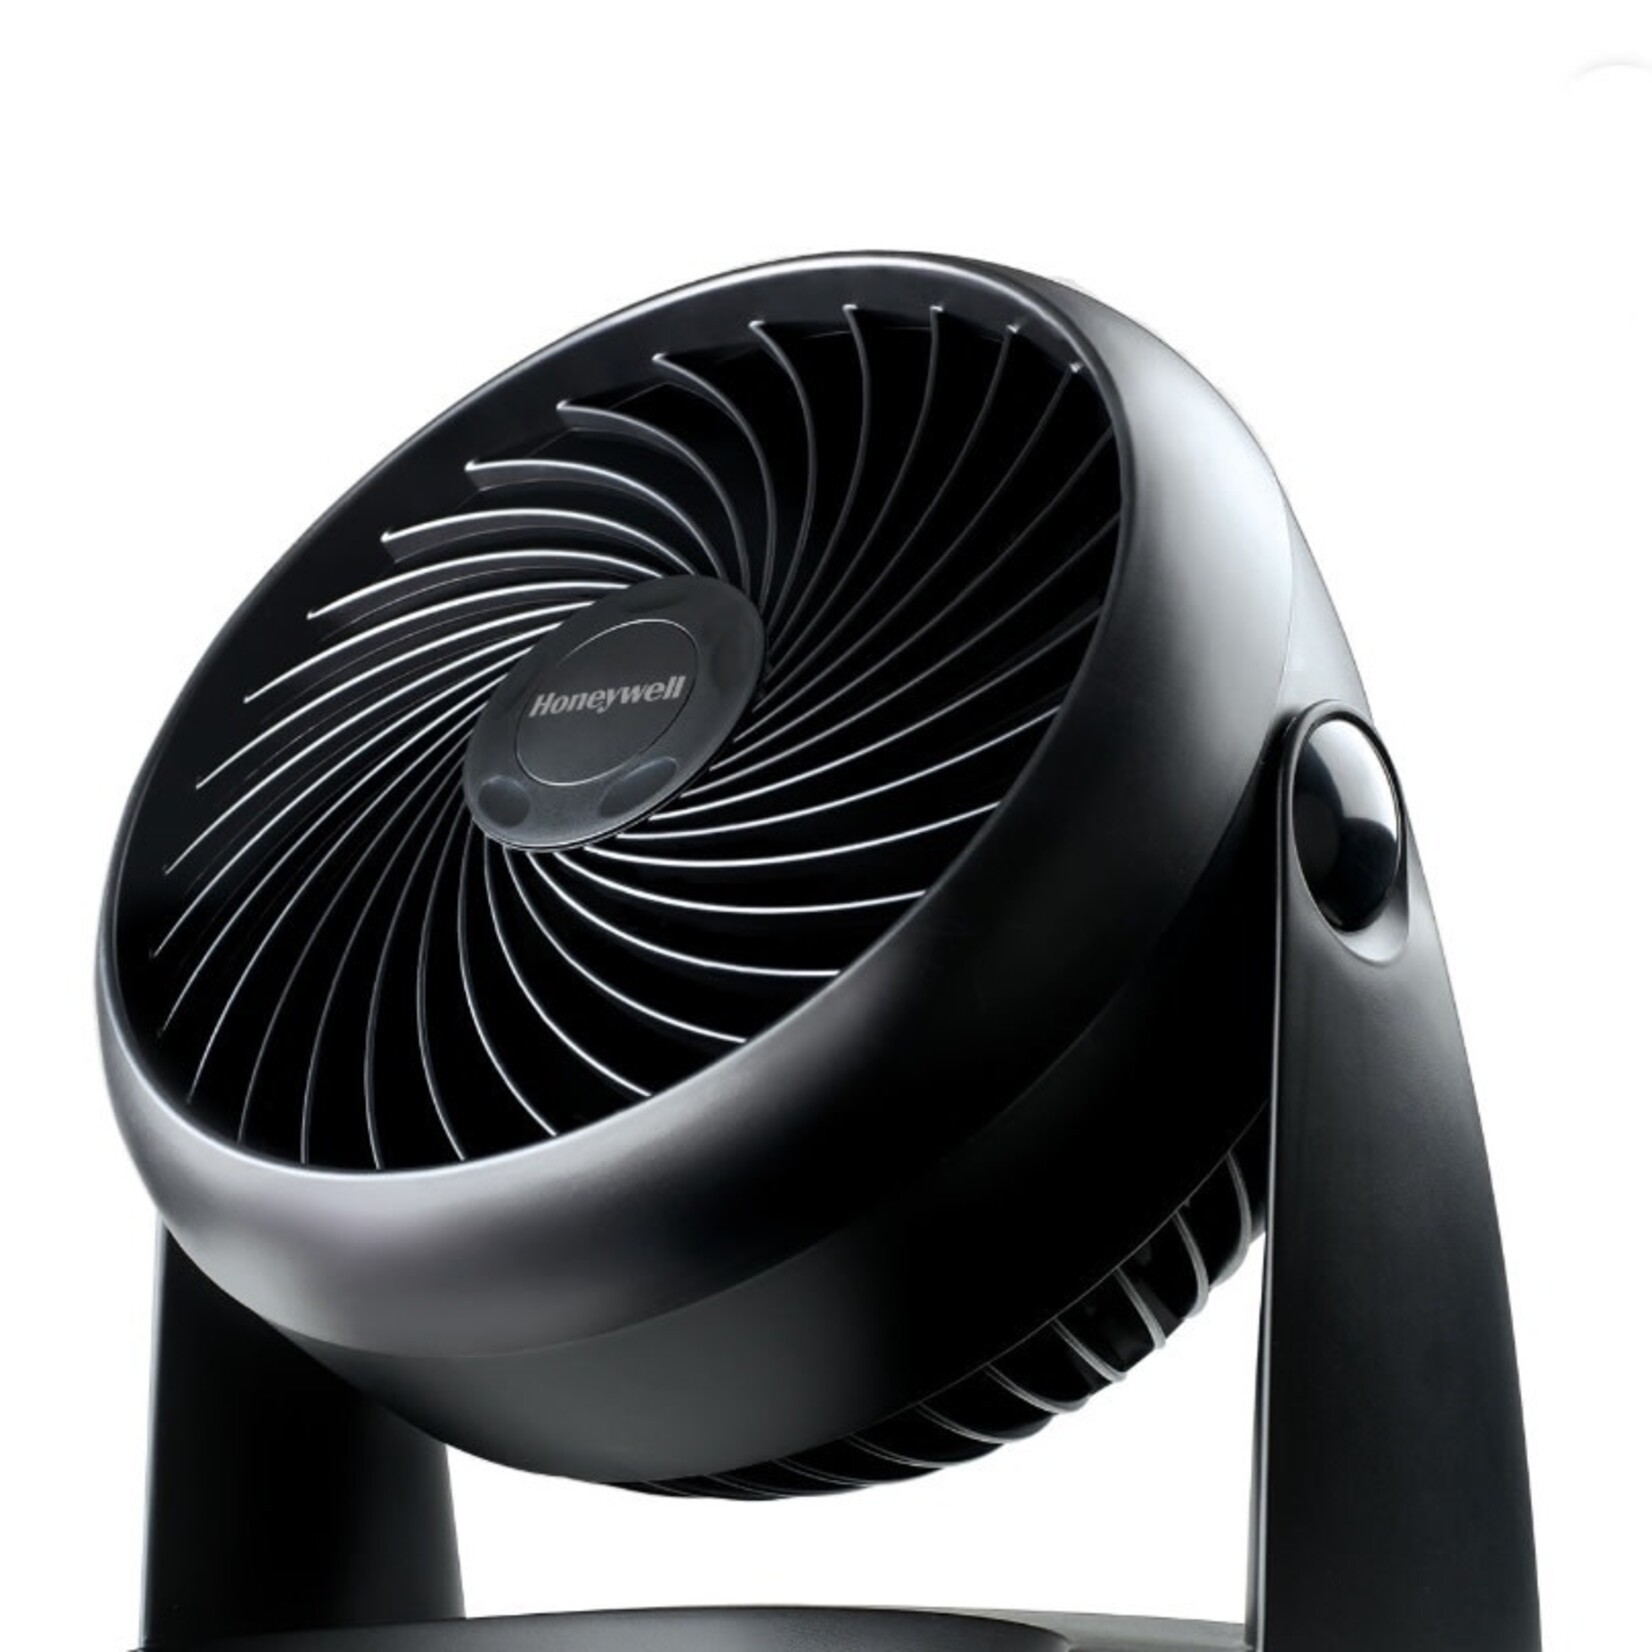 Discount Central Honeywell Turbo Force Power Air Circulator Fan, HPF820BWM, Black